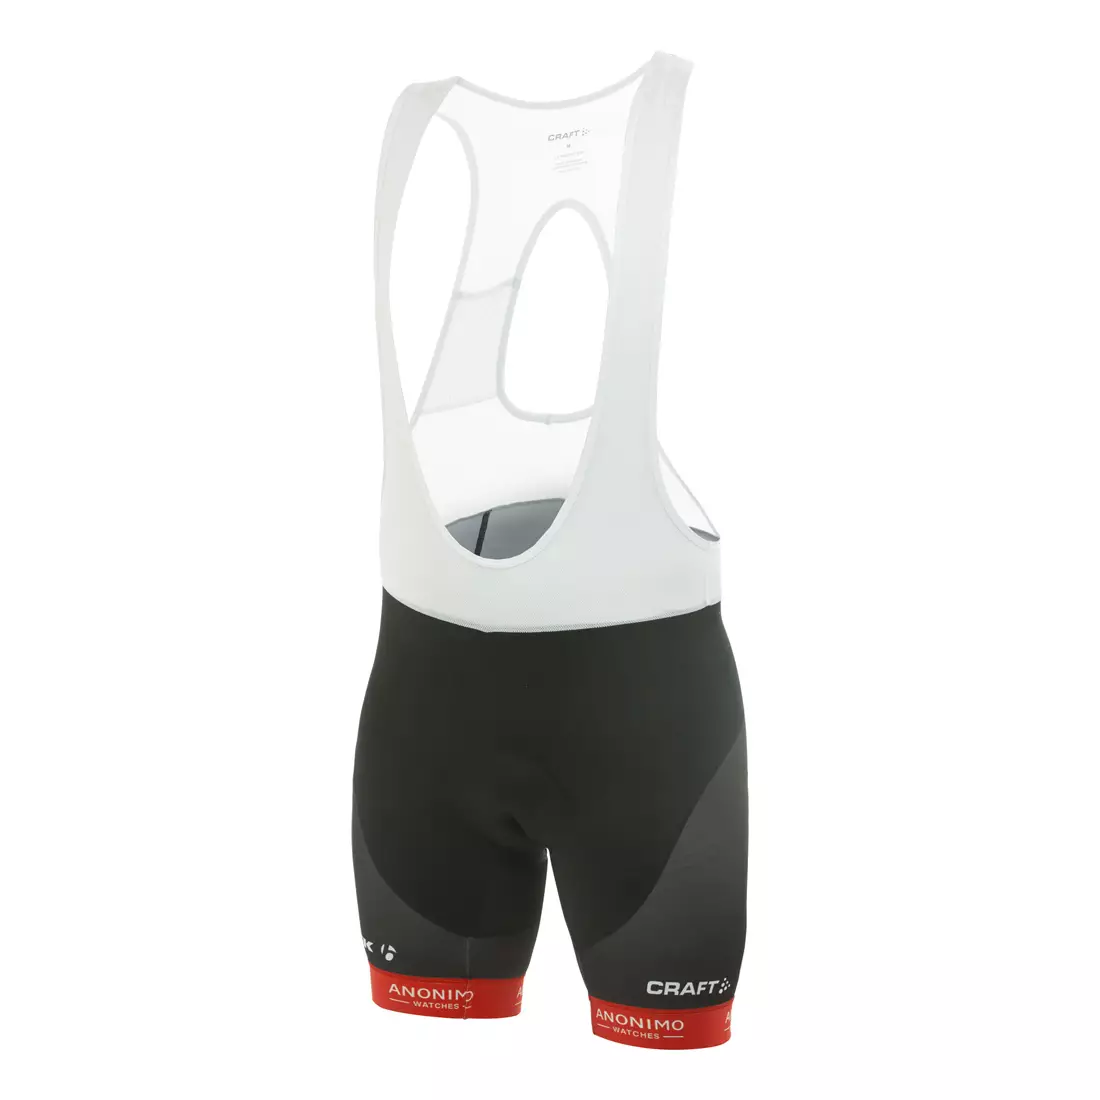 CRAFT 1902539-2900 - team RADIOSHACK TREK 2013 - men's cycling shorts